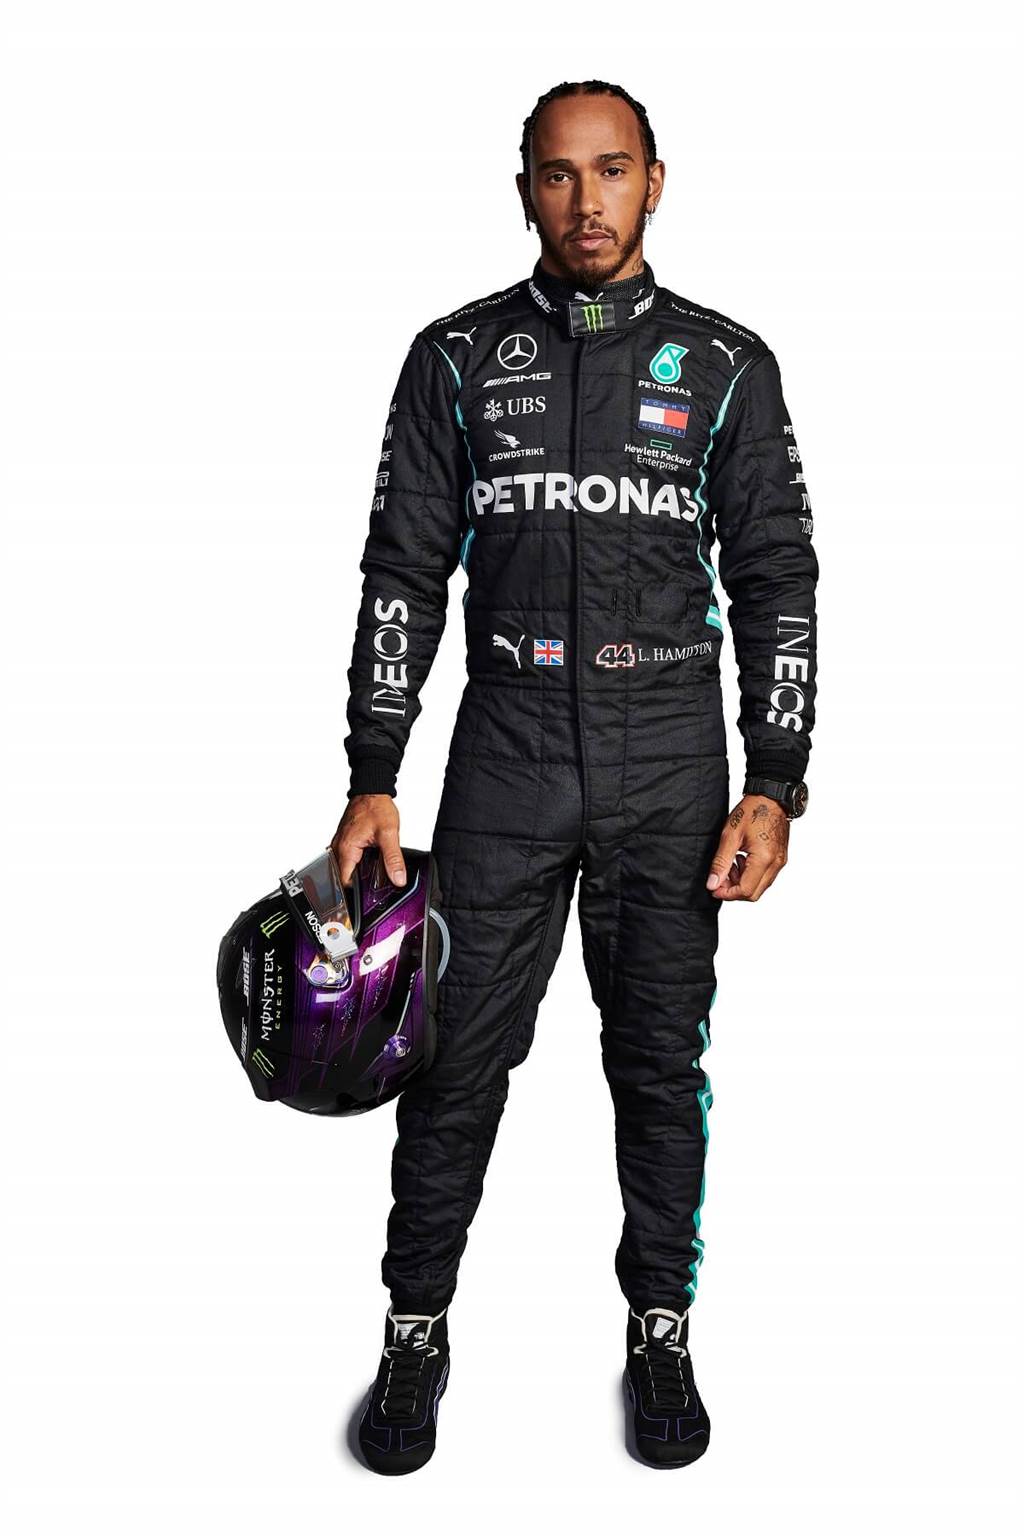 Mercedes-AMG Petronas F1車隊與Lewis Hamilton簽署2021年新合約